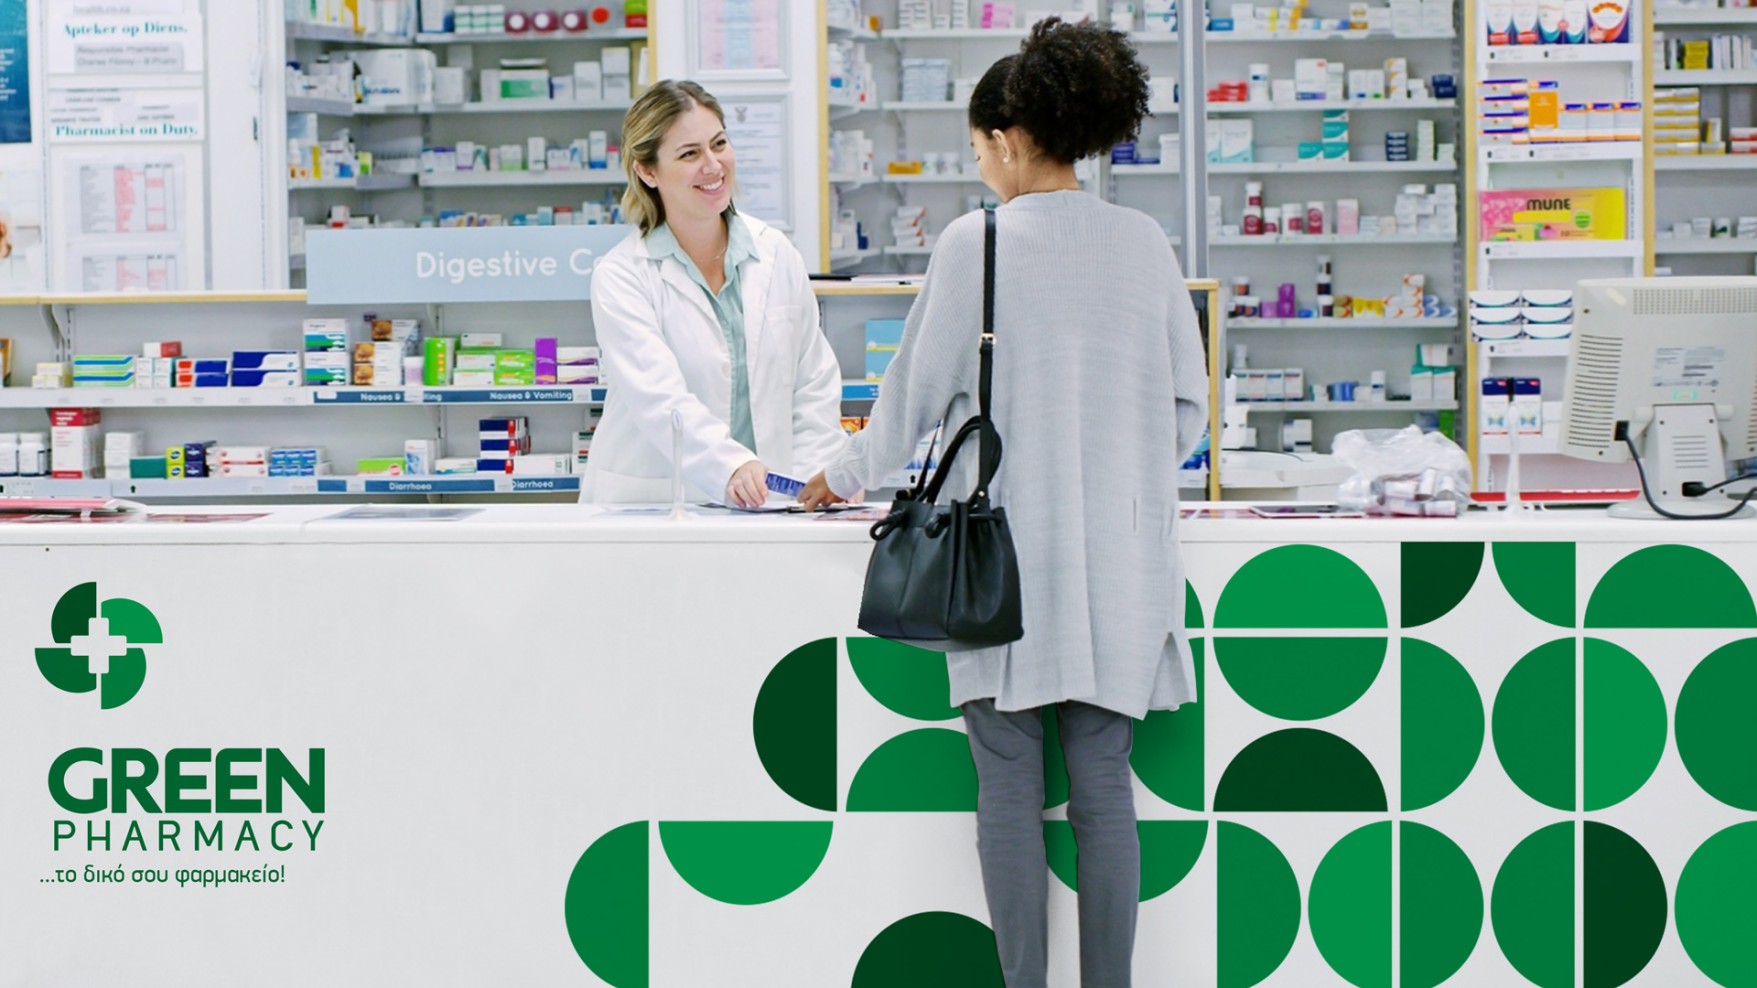  work-green-pharmacy-4